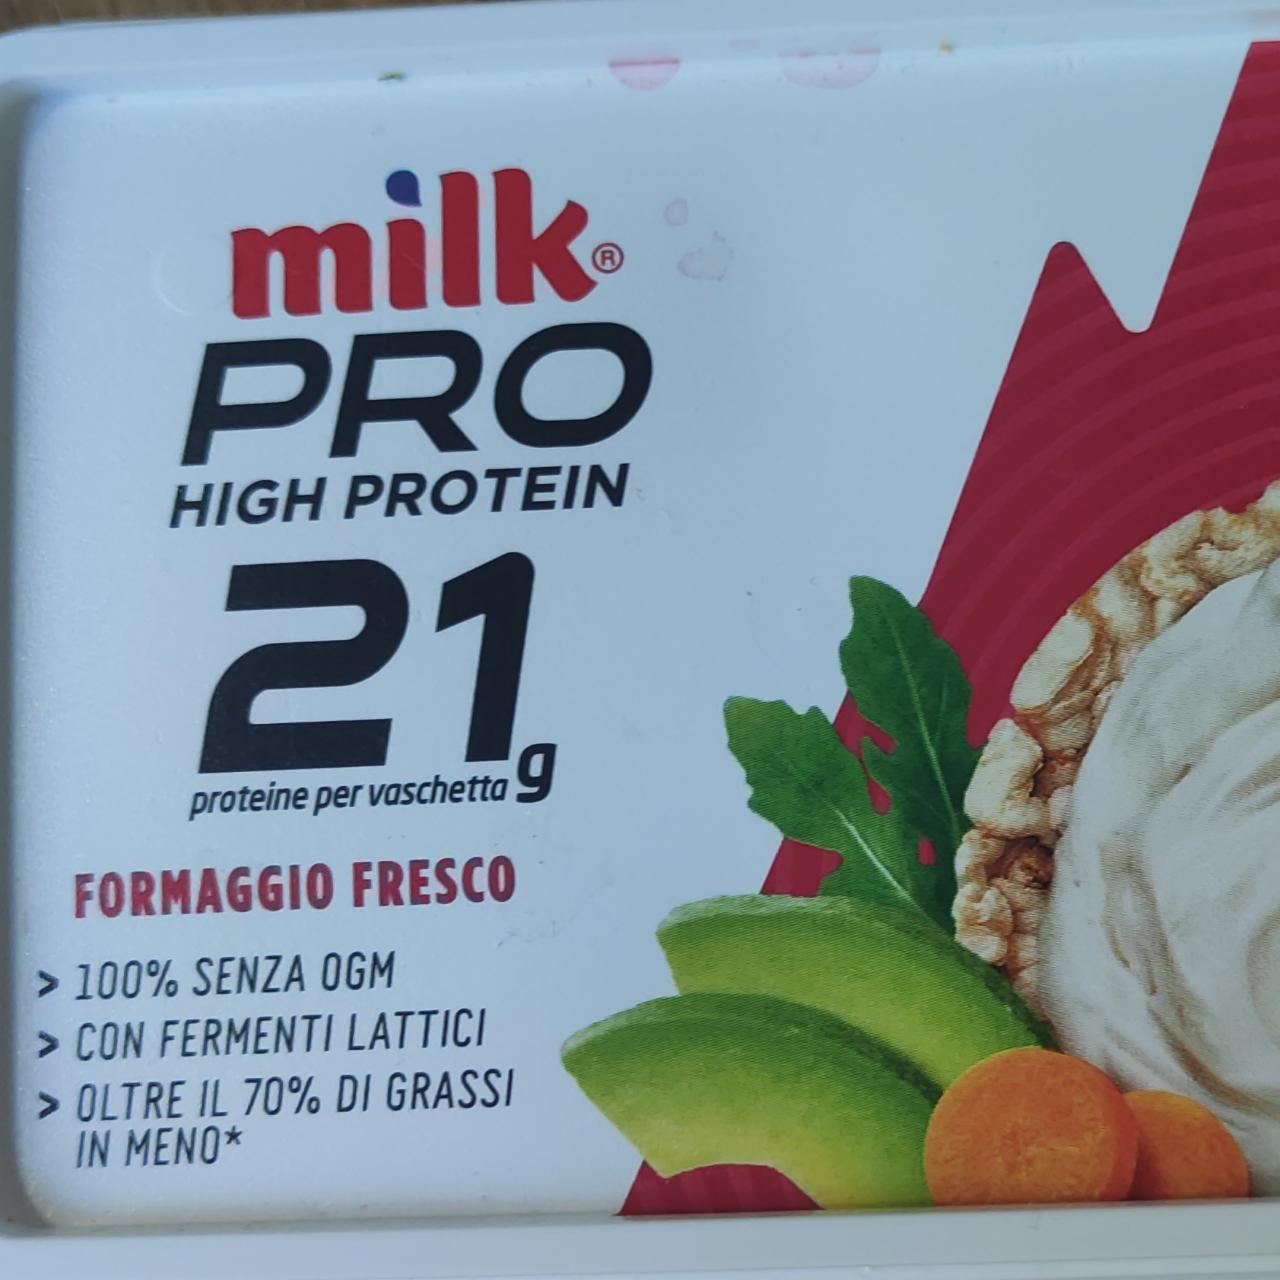 Фото - Pro High Protein 21g Formaggio fresco Milk